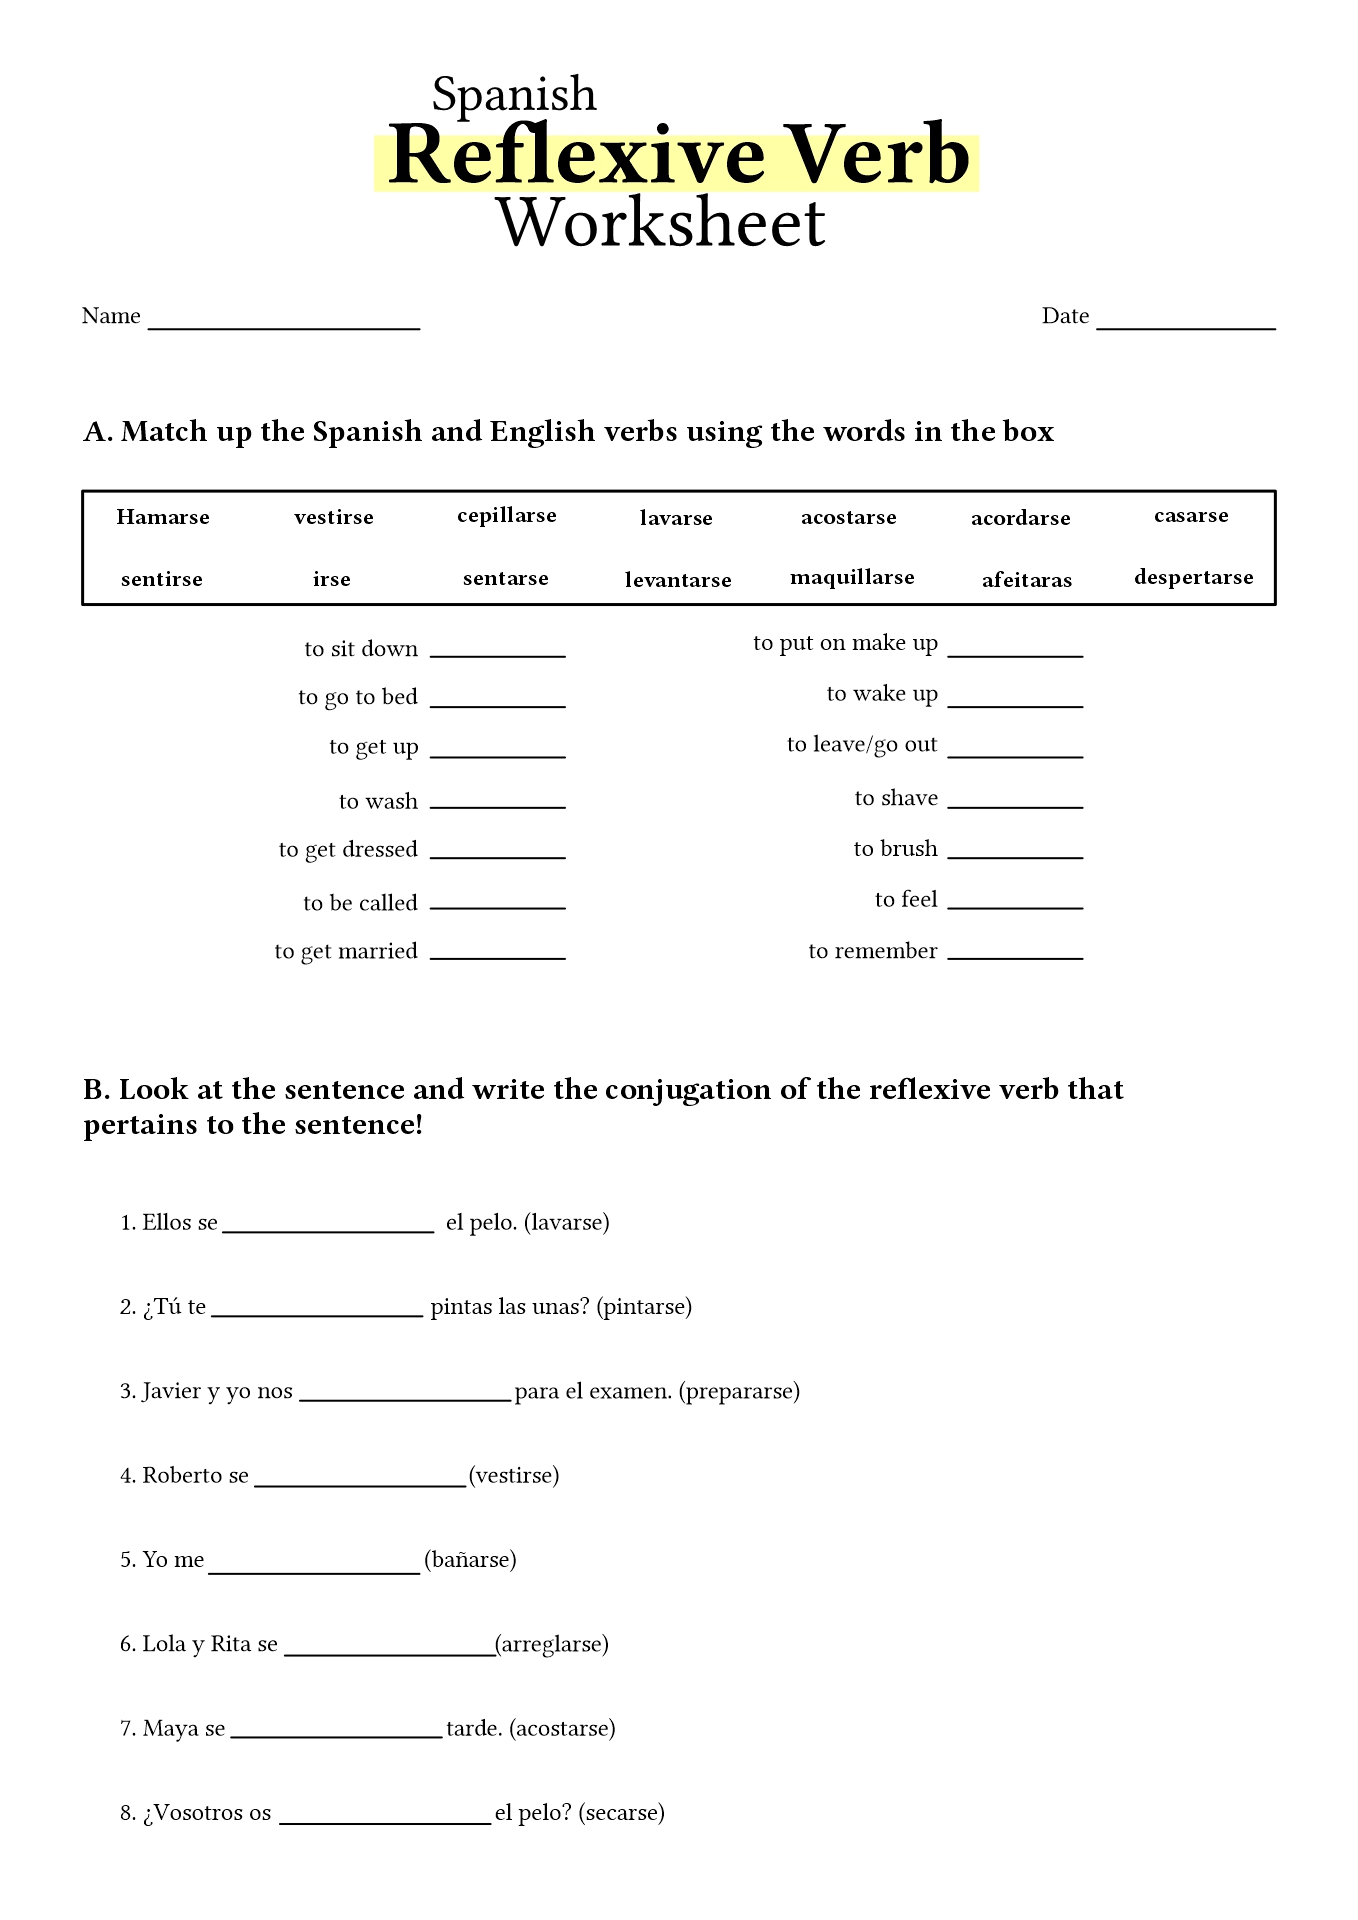 Spanish Reflexive Verbs Worksheet Image